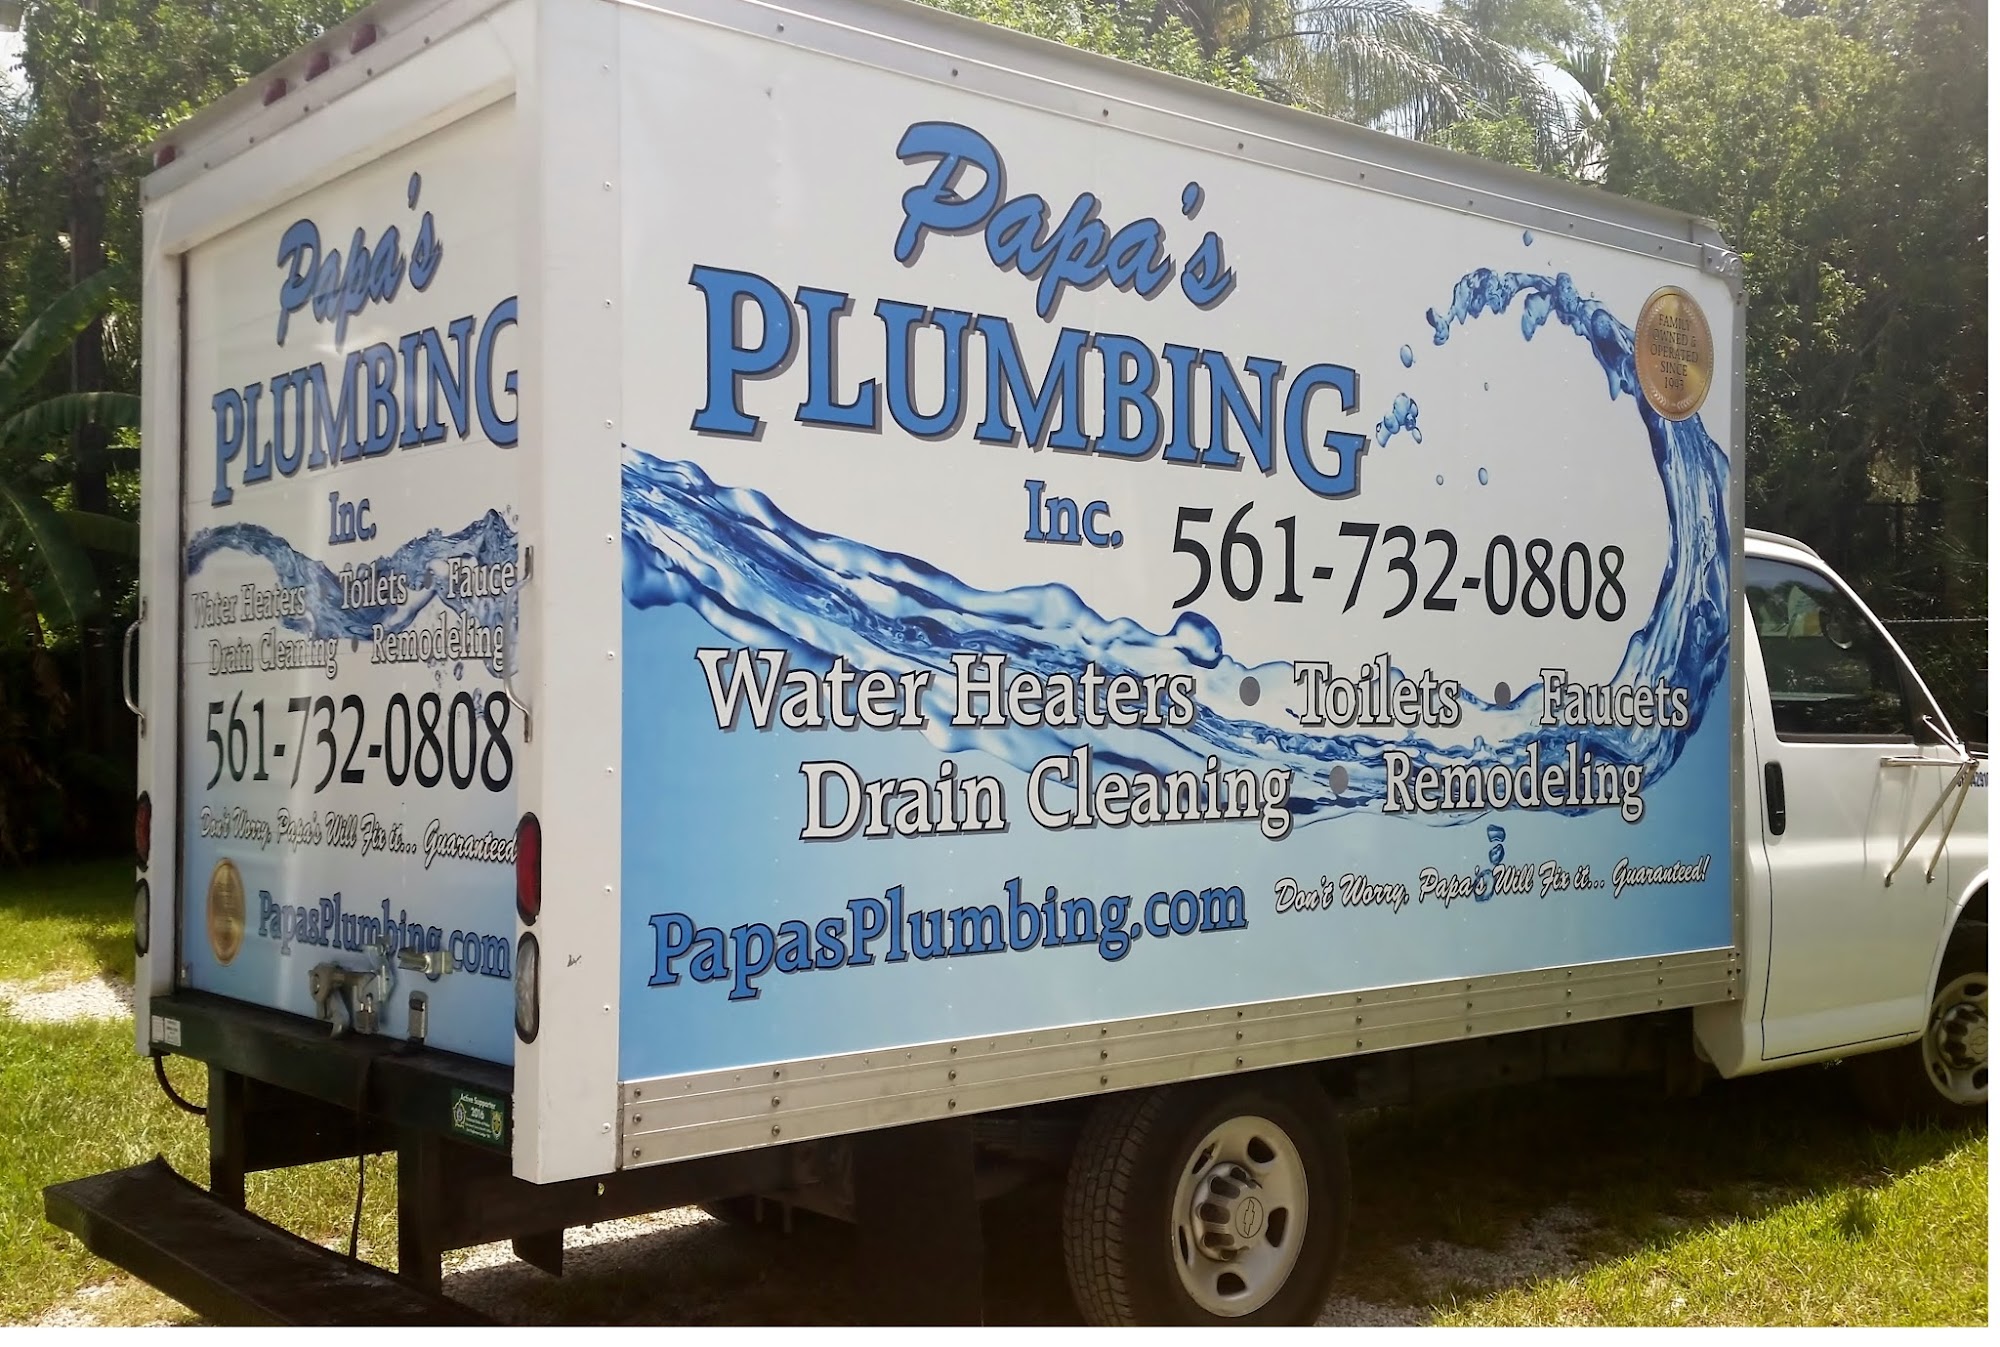 Papa's Plumbing Inc.